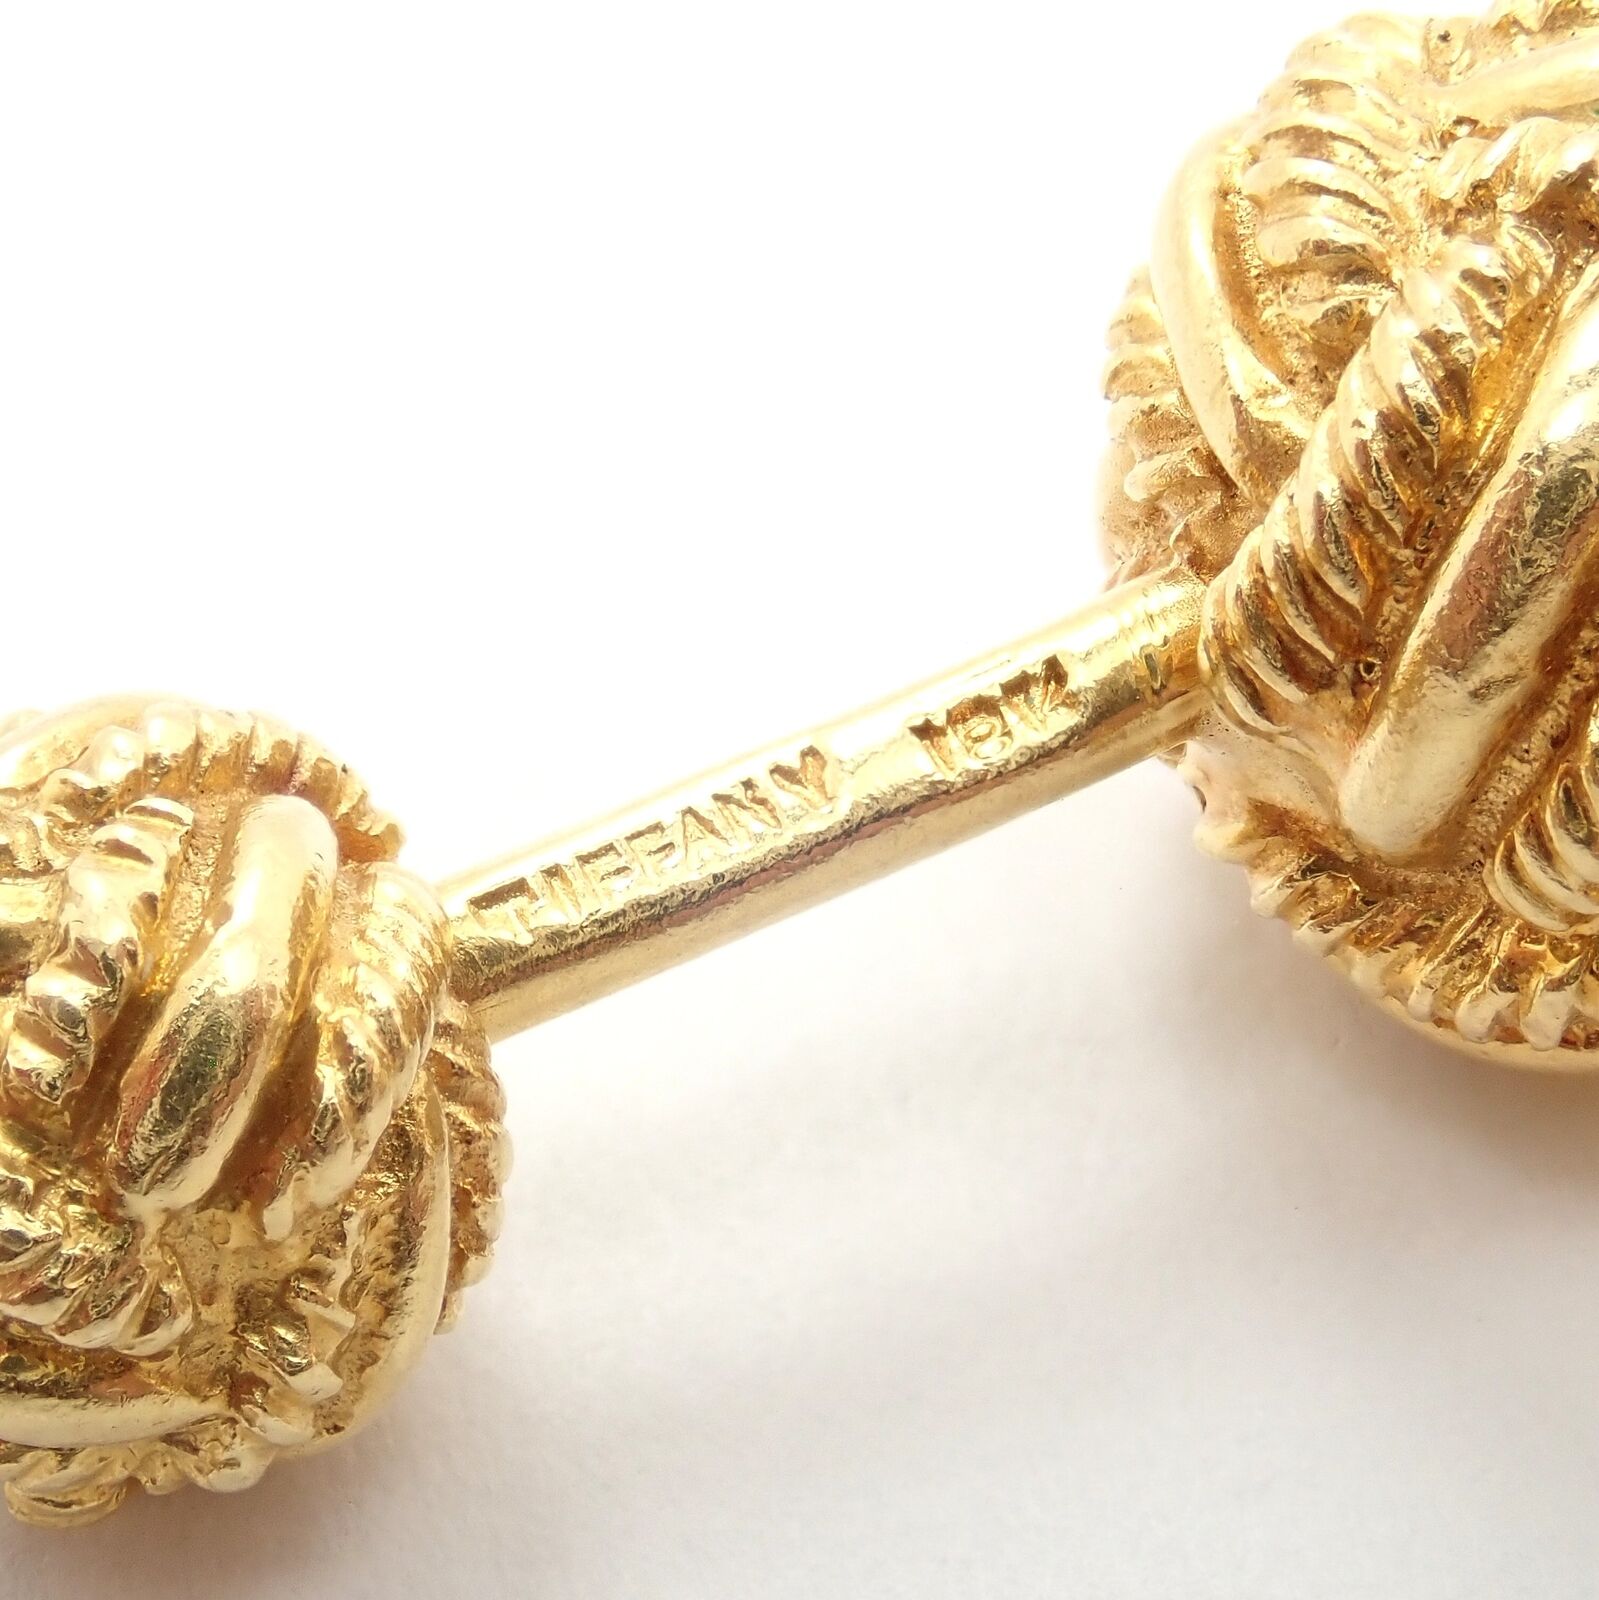 Tiffany & Co. Jewelry & Watches:Men's Jewelry:Cufflinks Rare! Vintage Tiffany & Co. 18k Yellow Gold Schlumberger Rope Knot Cufflinks